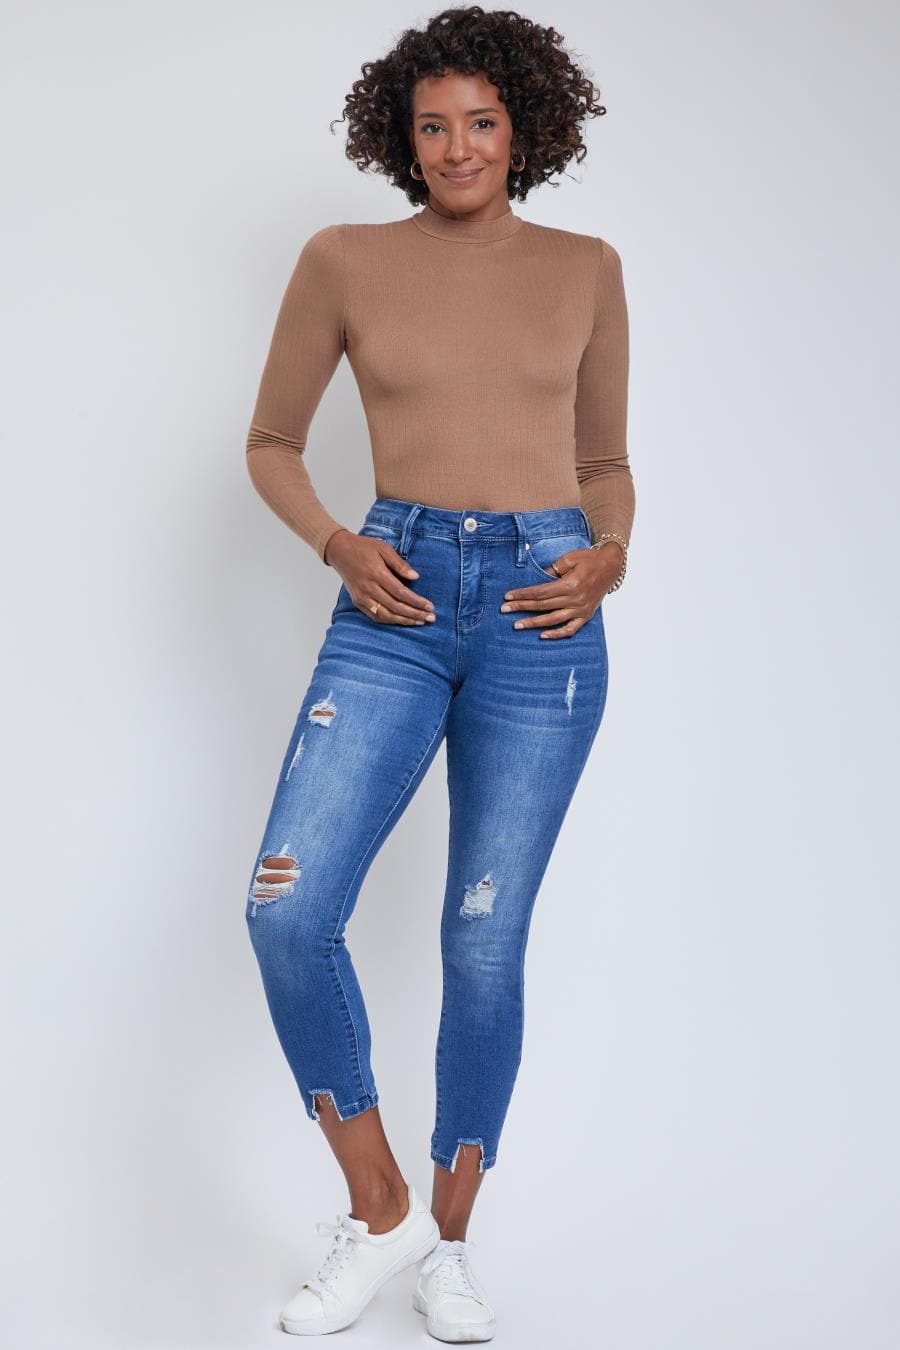 Blue denim capri jeans {Choose size} Fashion royalty FR:16